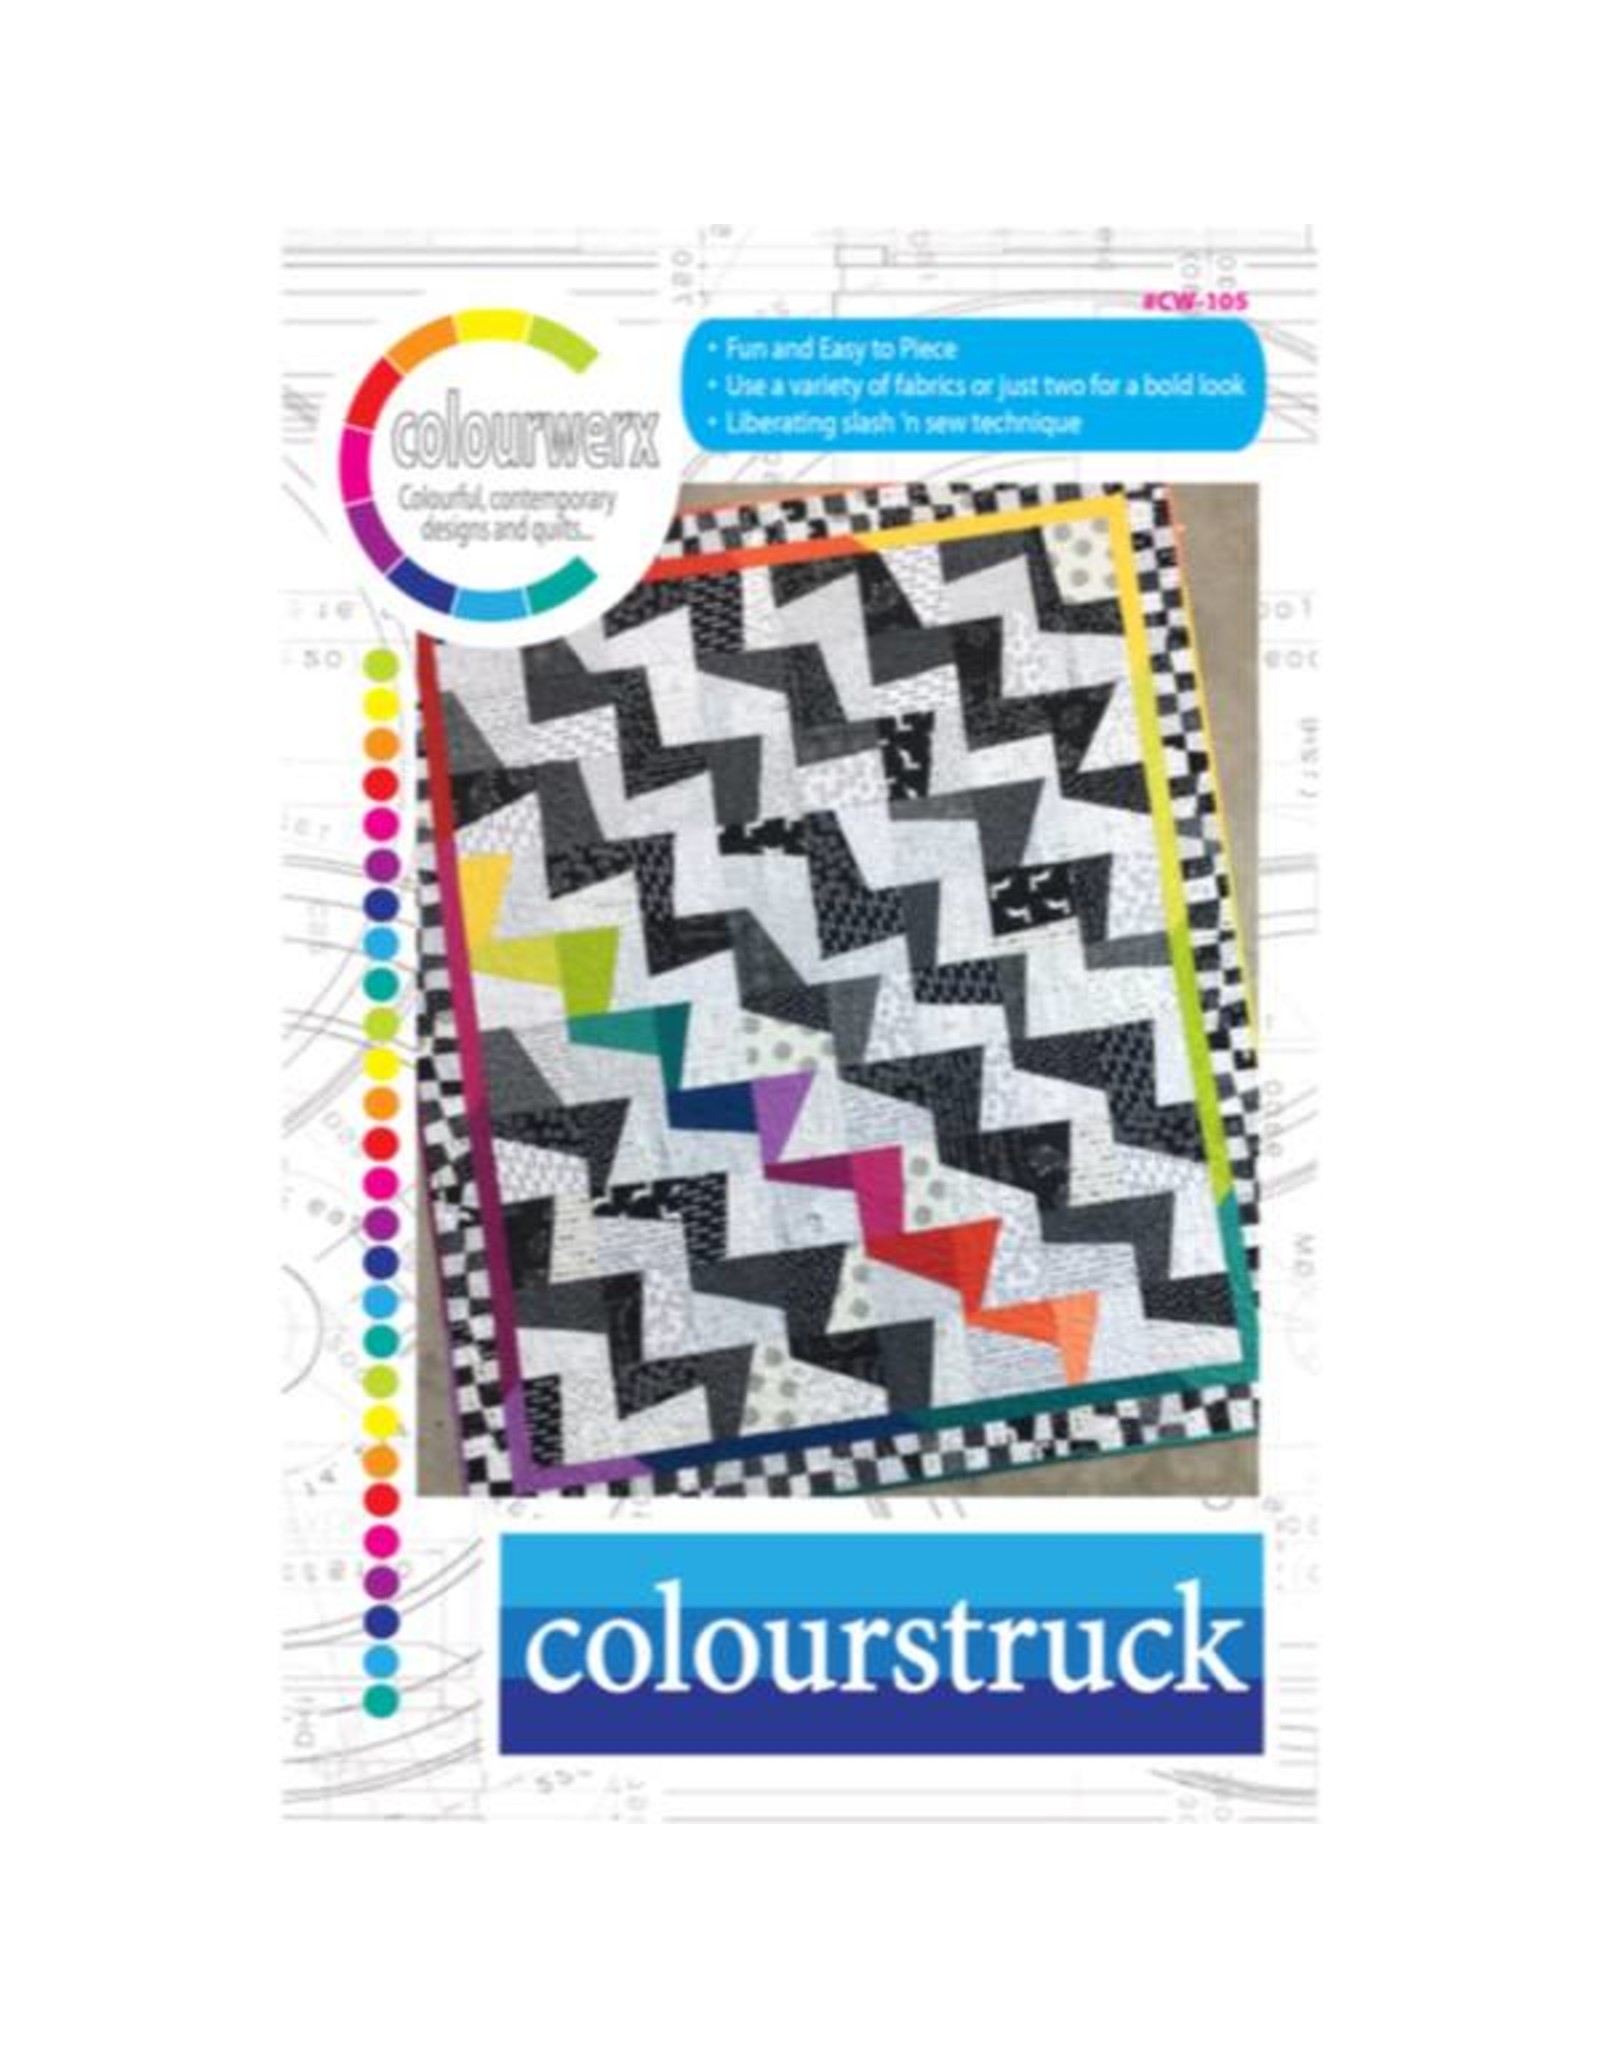 Colourwerx Colourstruck - Quilt pattern